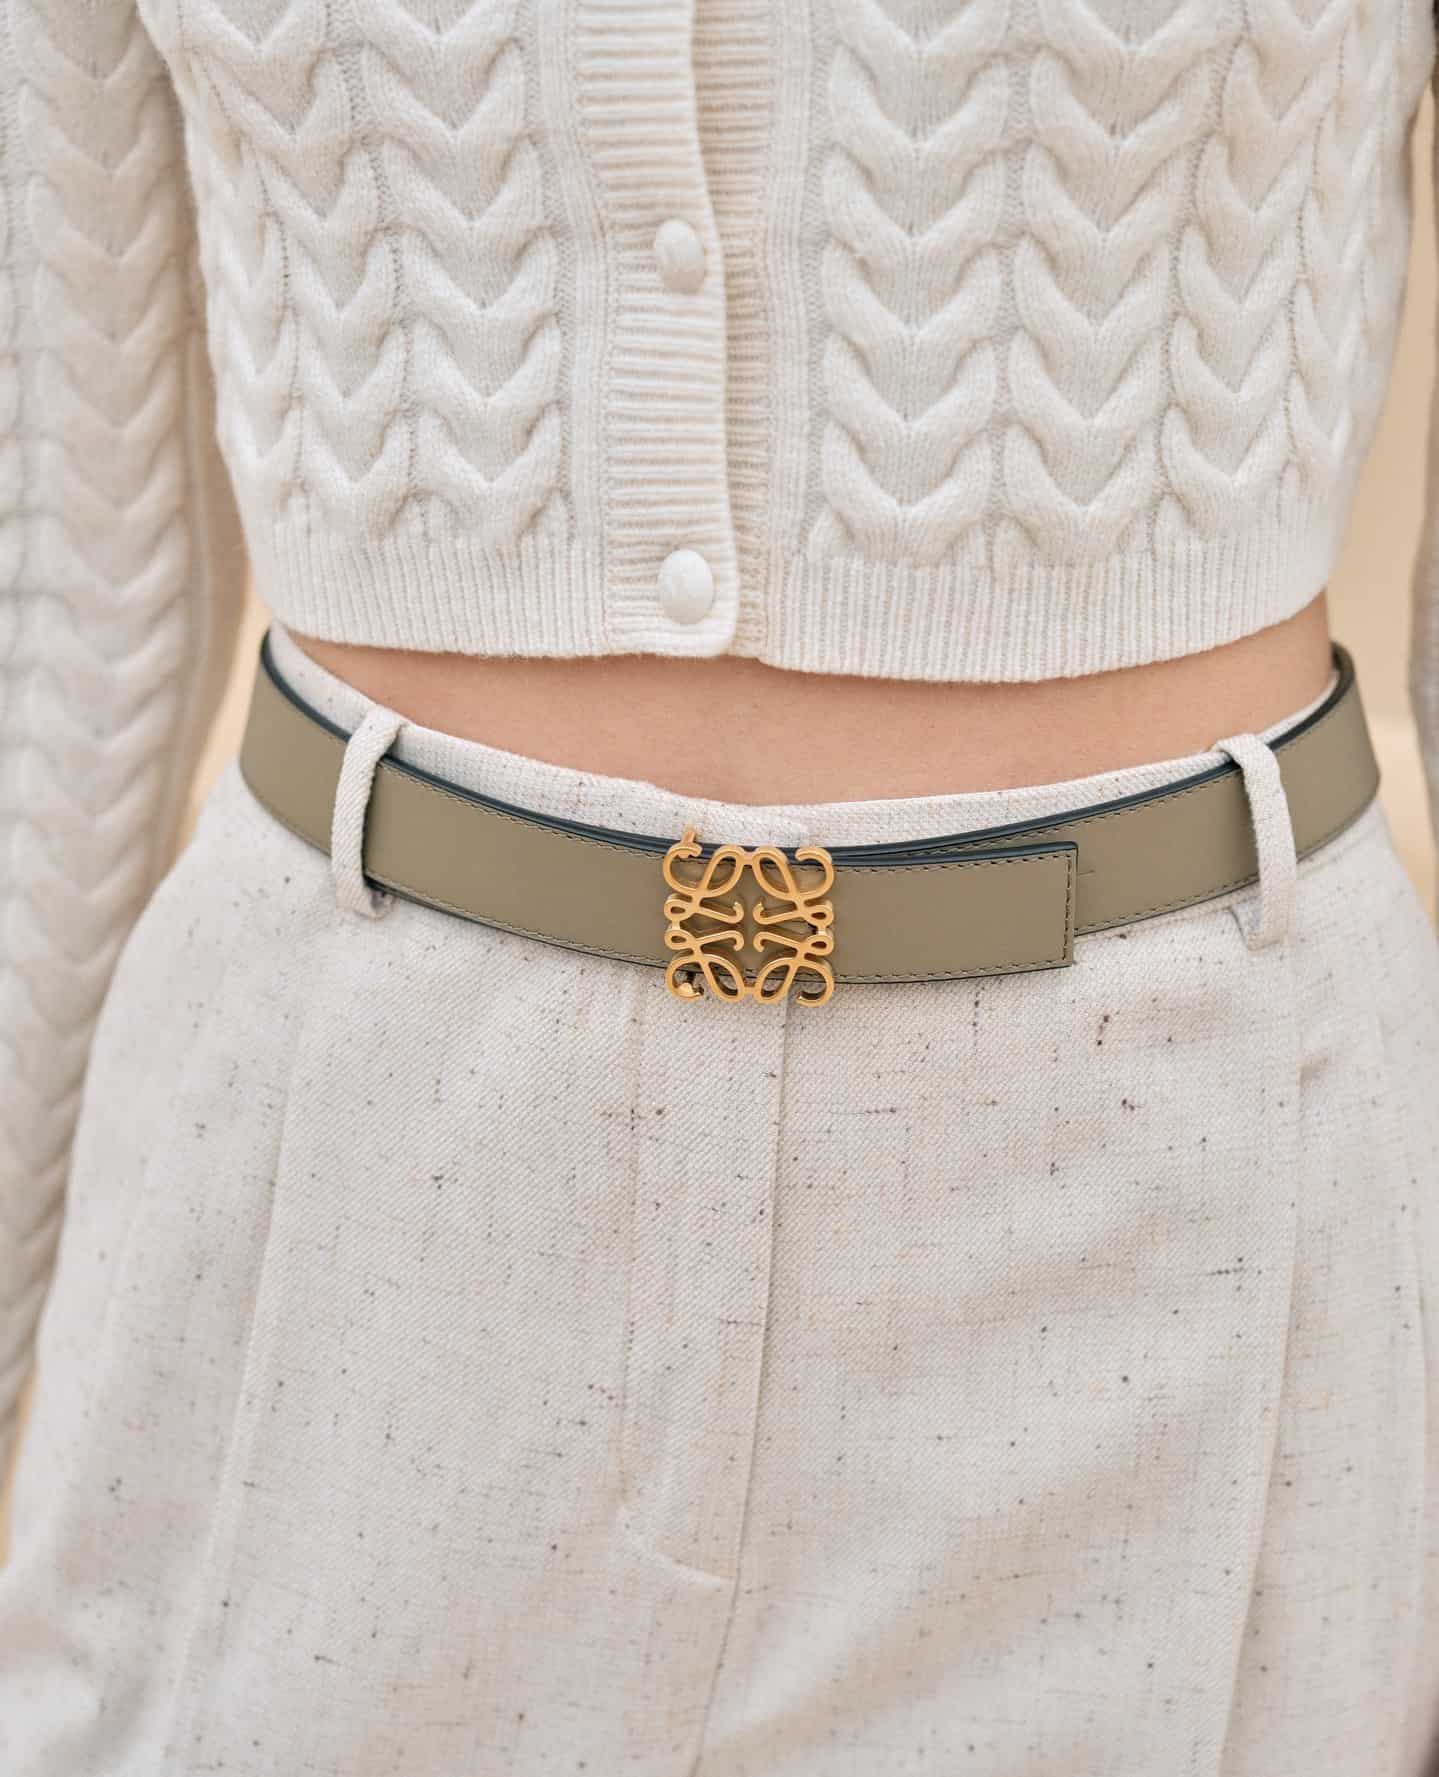 Loewe Designer belt styled